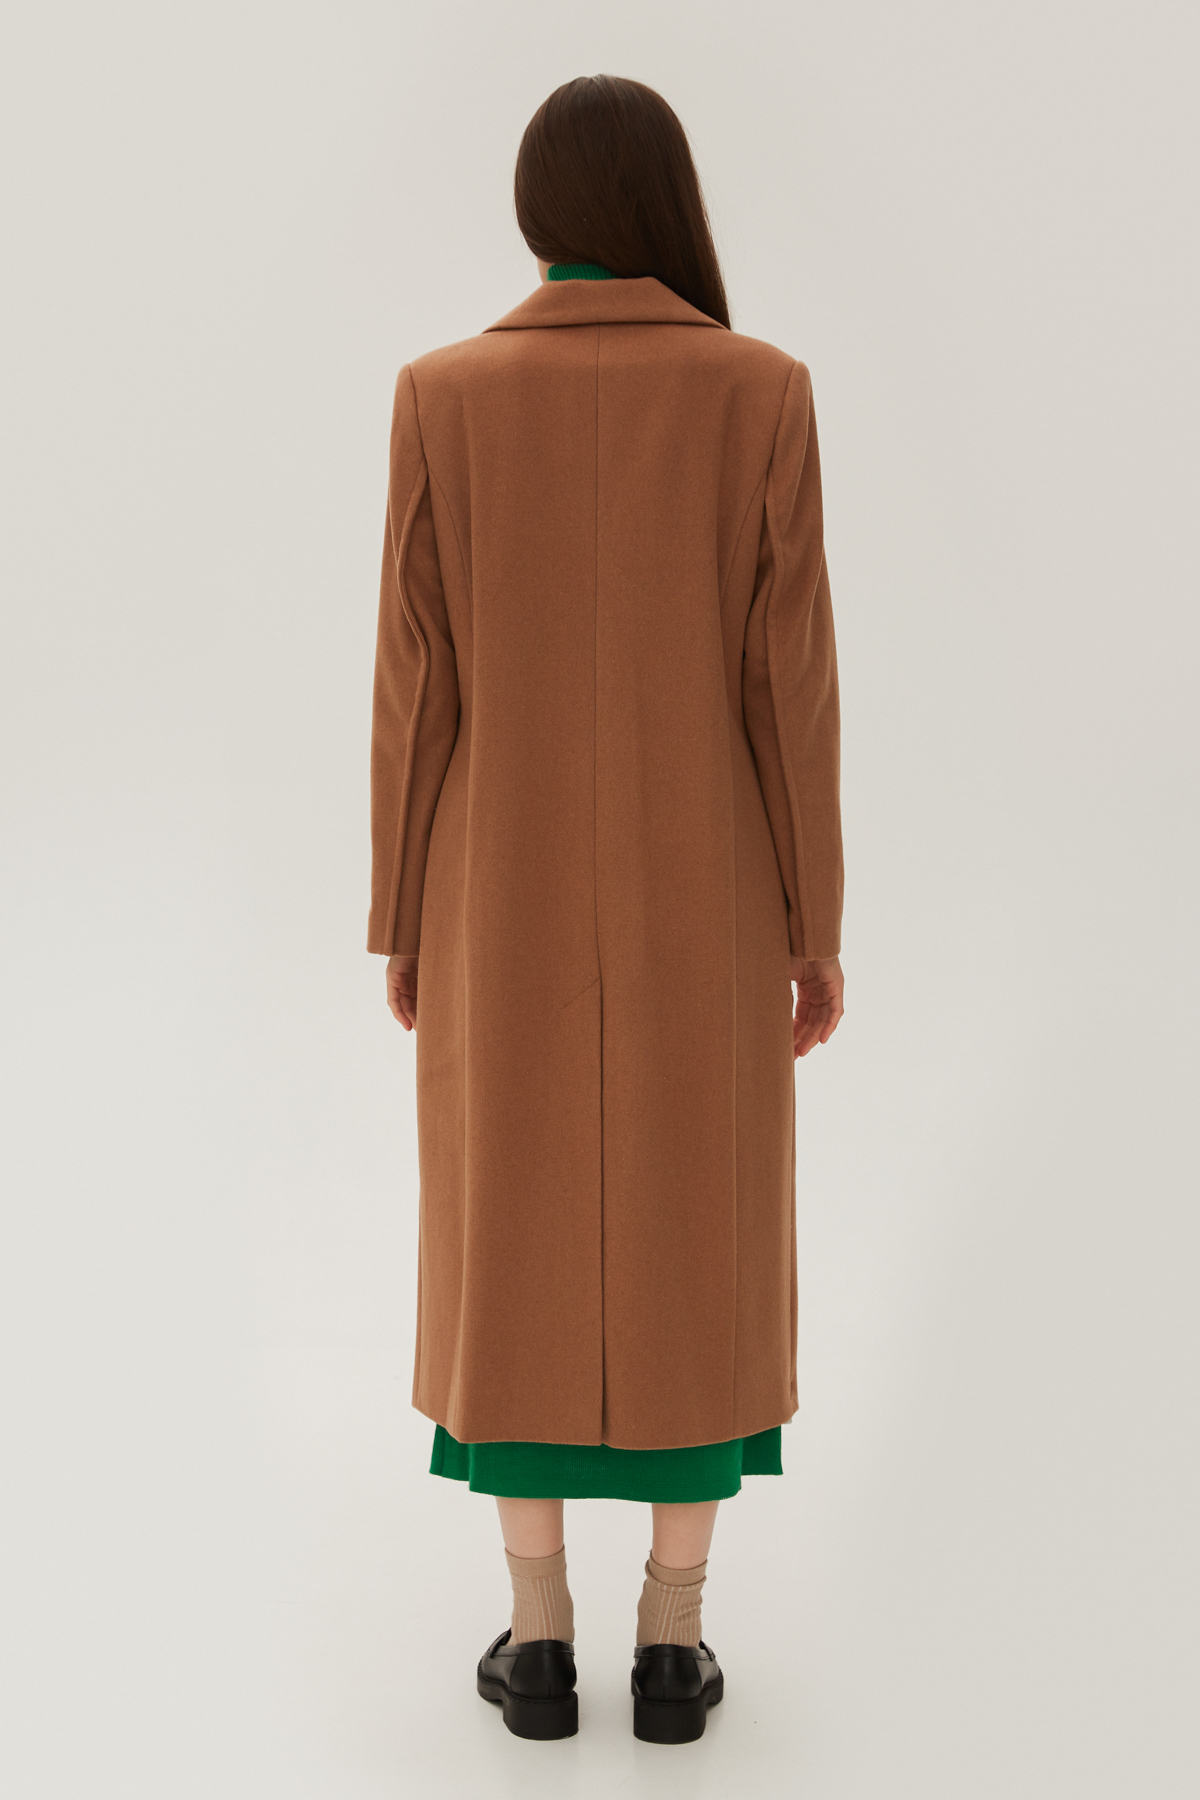 Camel long wool coat, photo 3